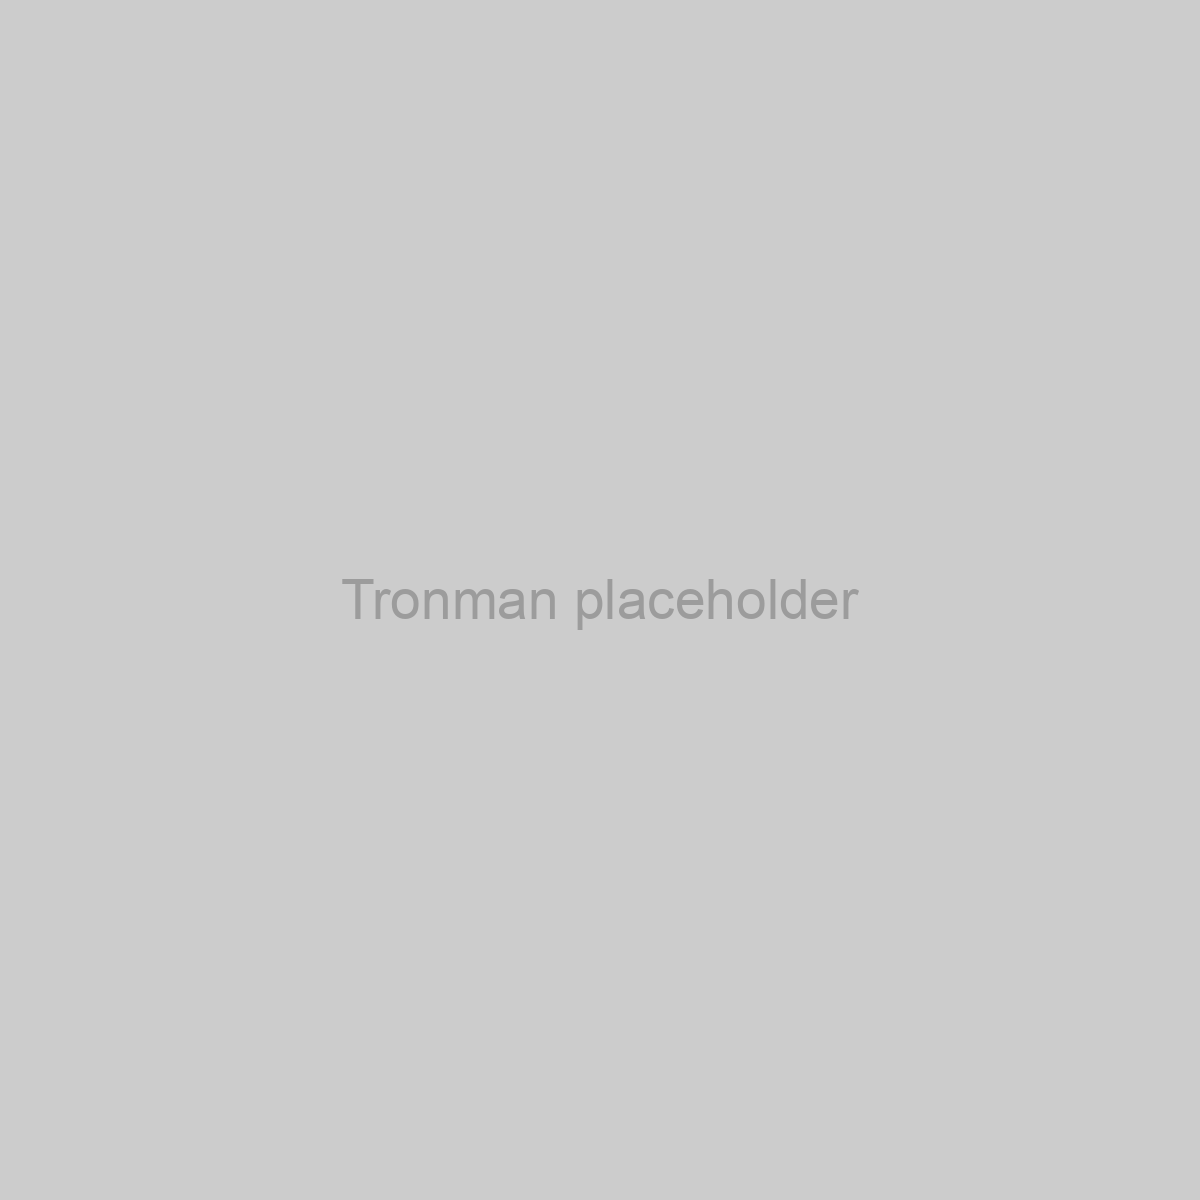 Tronman Placeholder Image